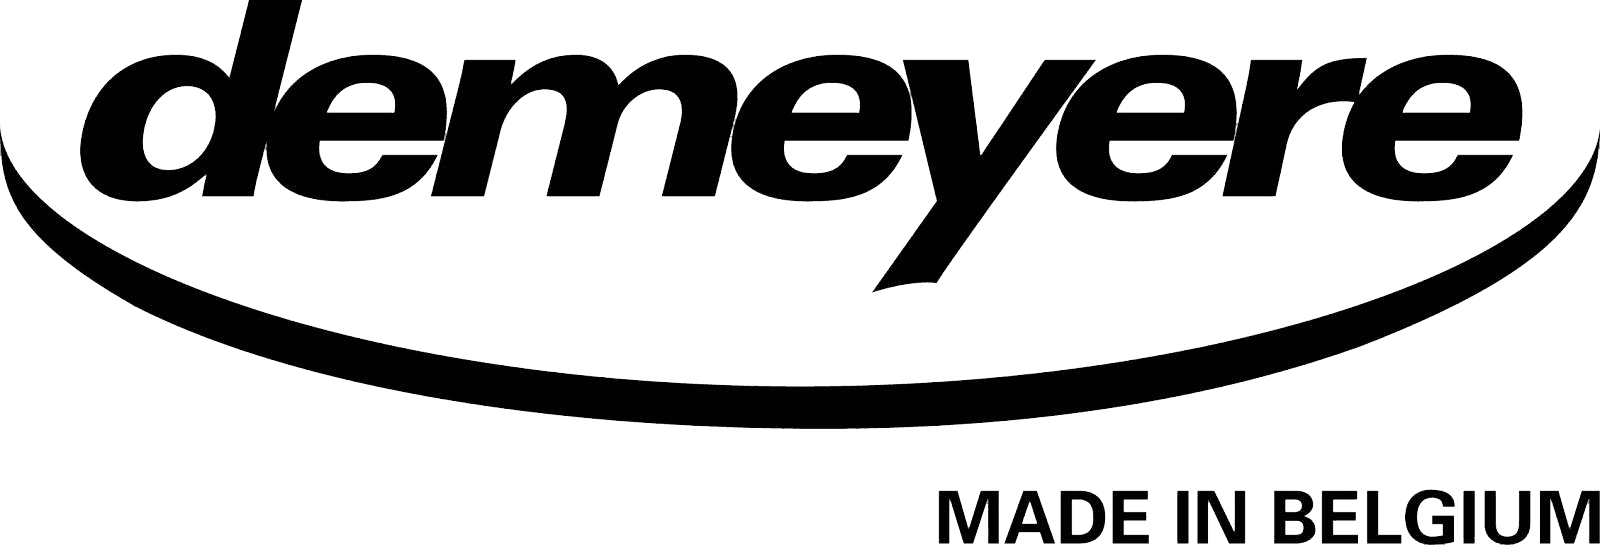 Cozino - Demeyere Logo